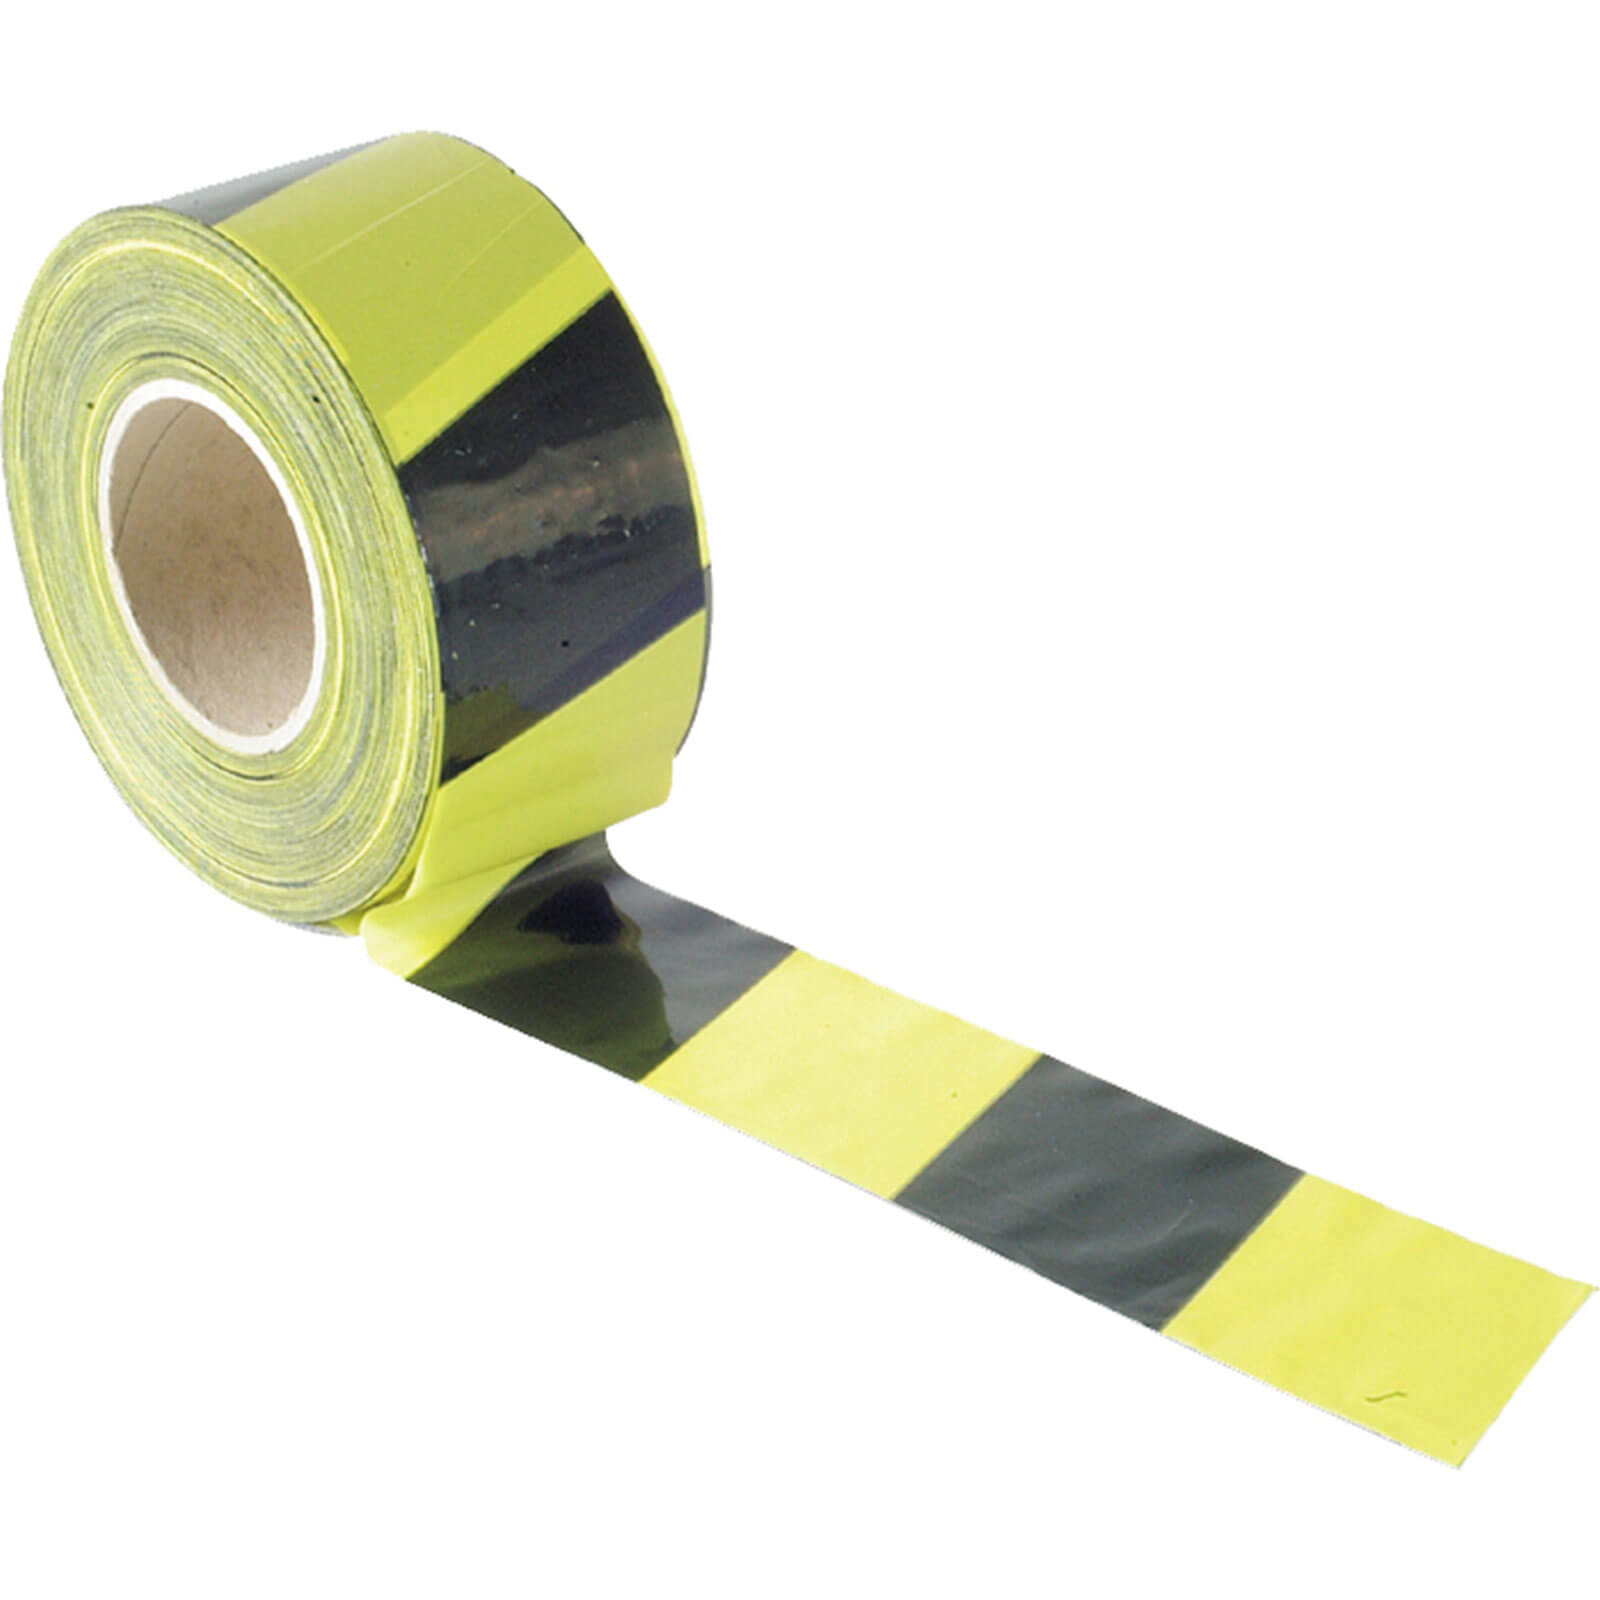 Image of Sirius Barrier Warning Tape Black / Yellow 70mm 500m